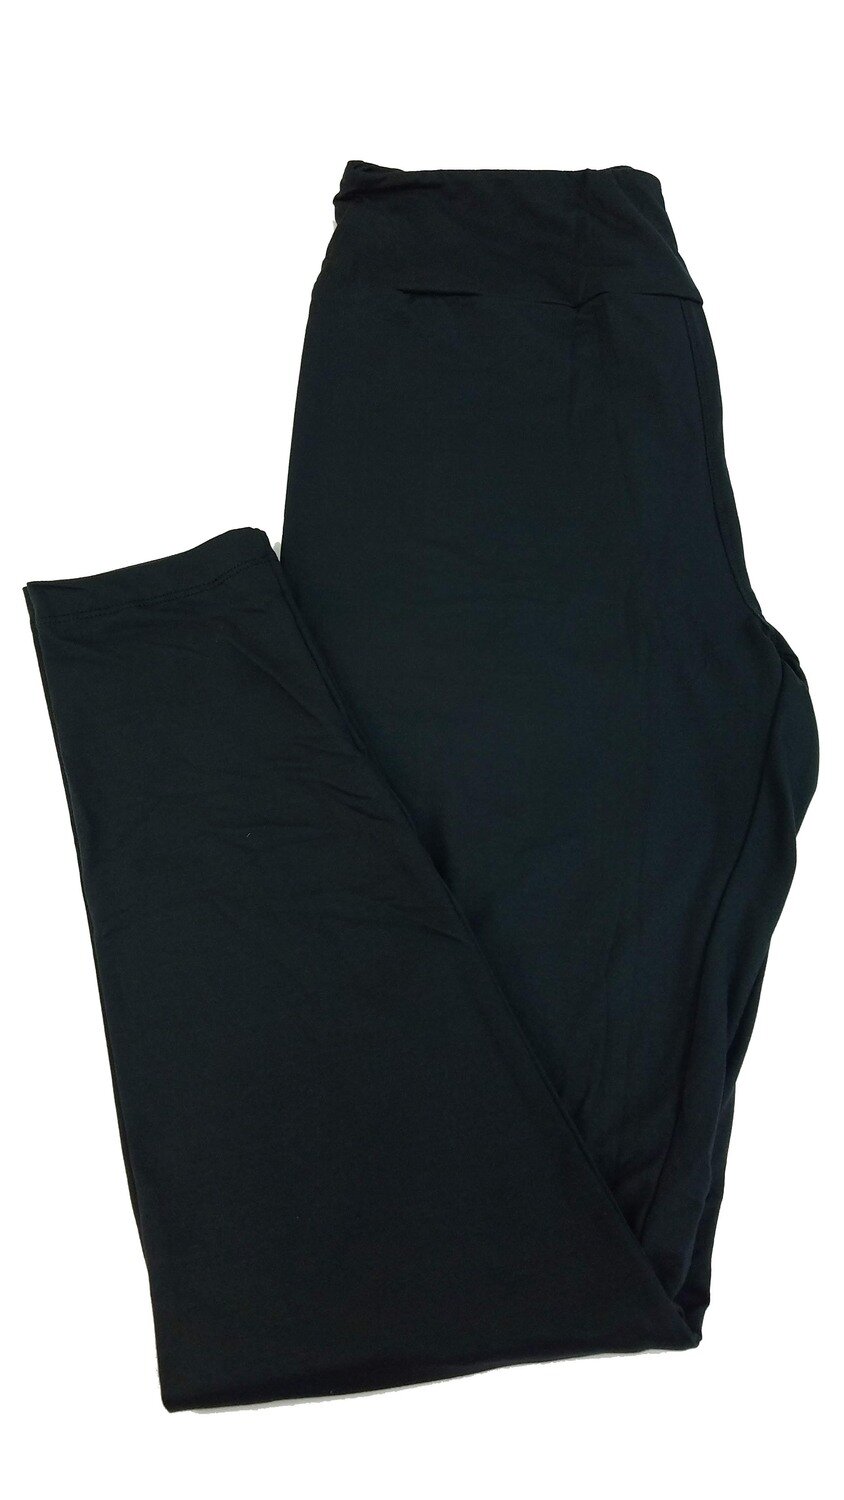 LuLaRoe Tall Curvy TC Solid Black Buttery Soft Leggings fits Adult Women sizes 12-18